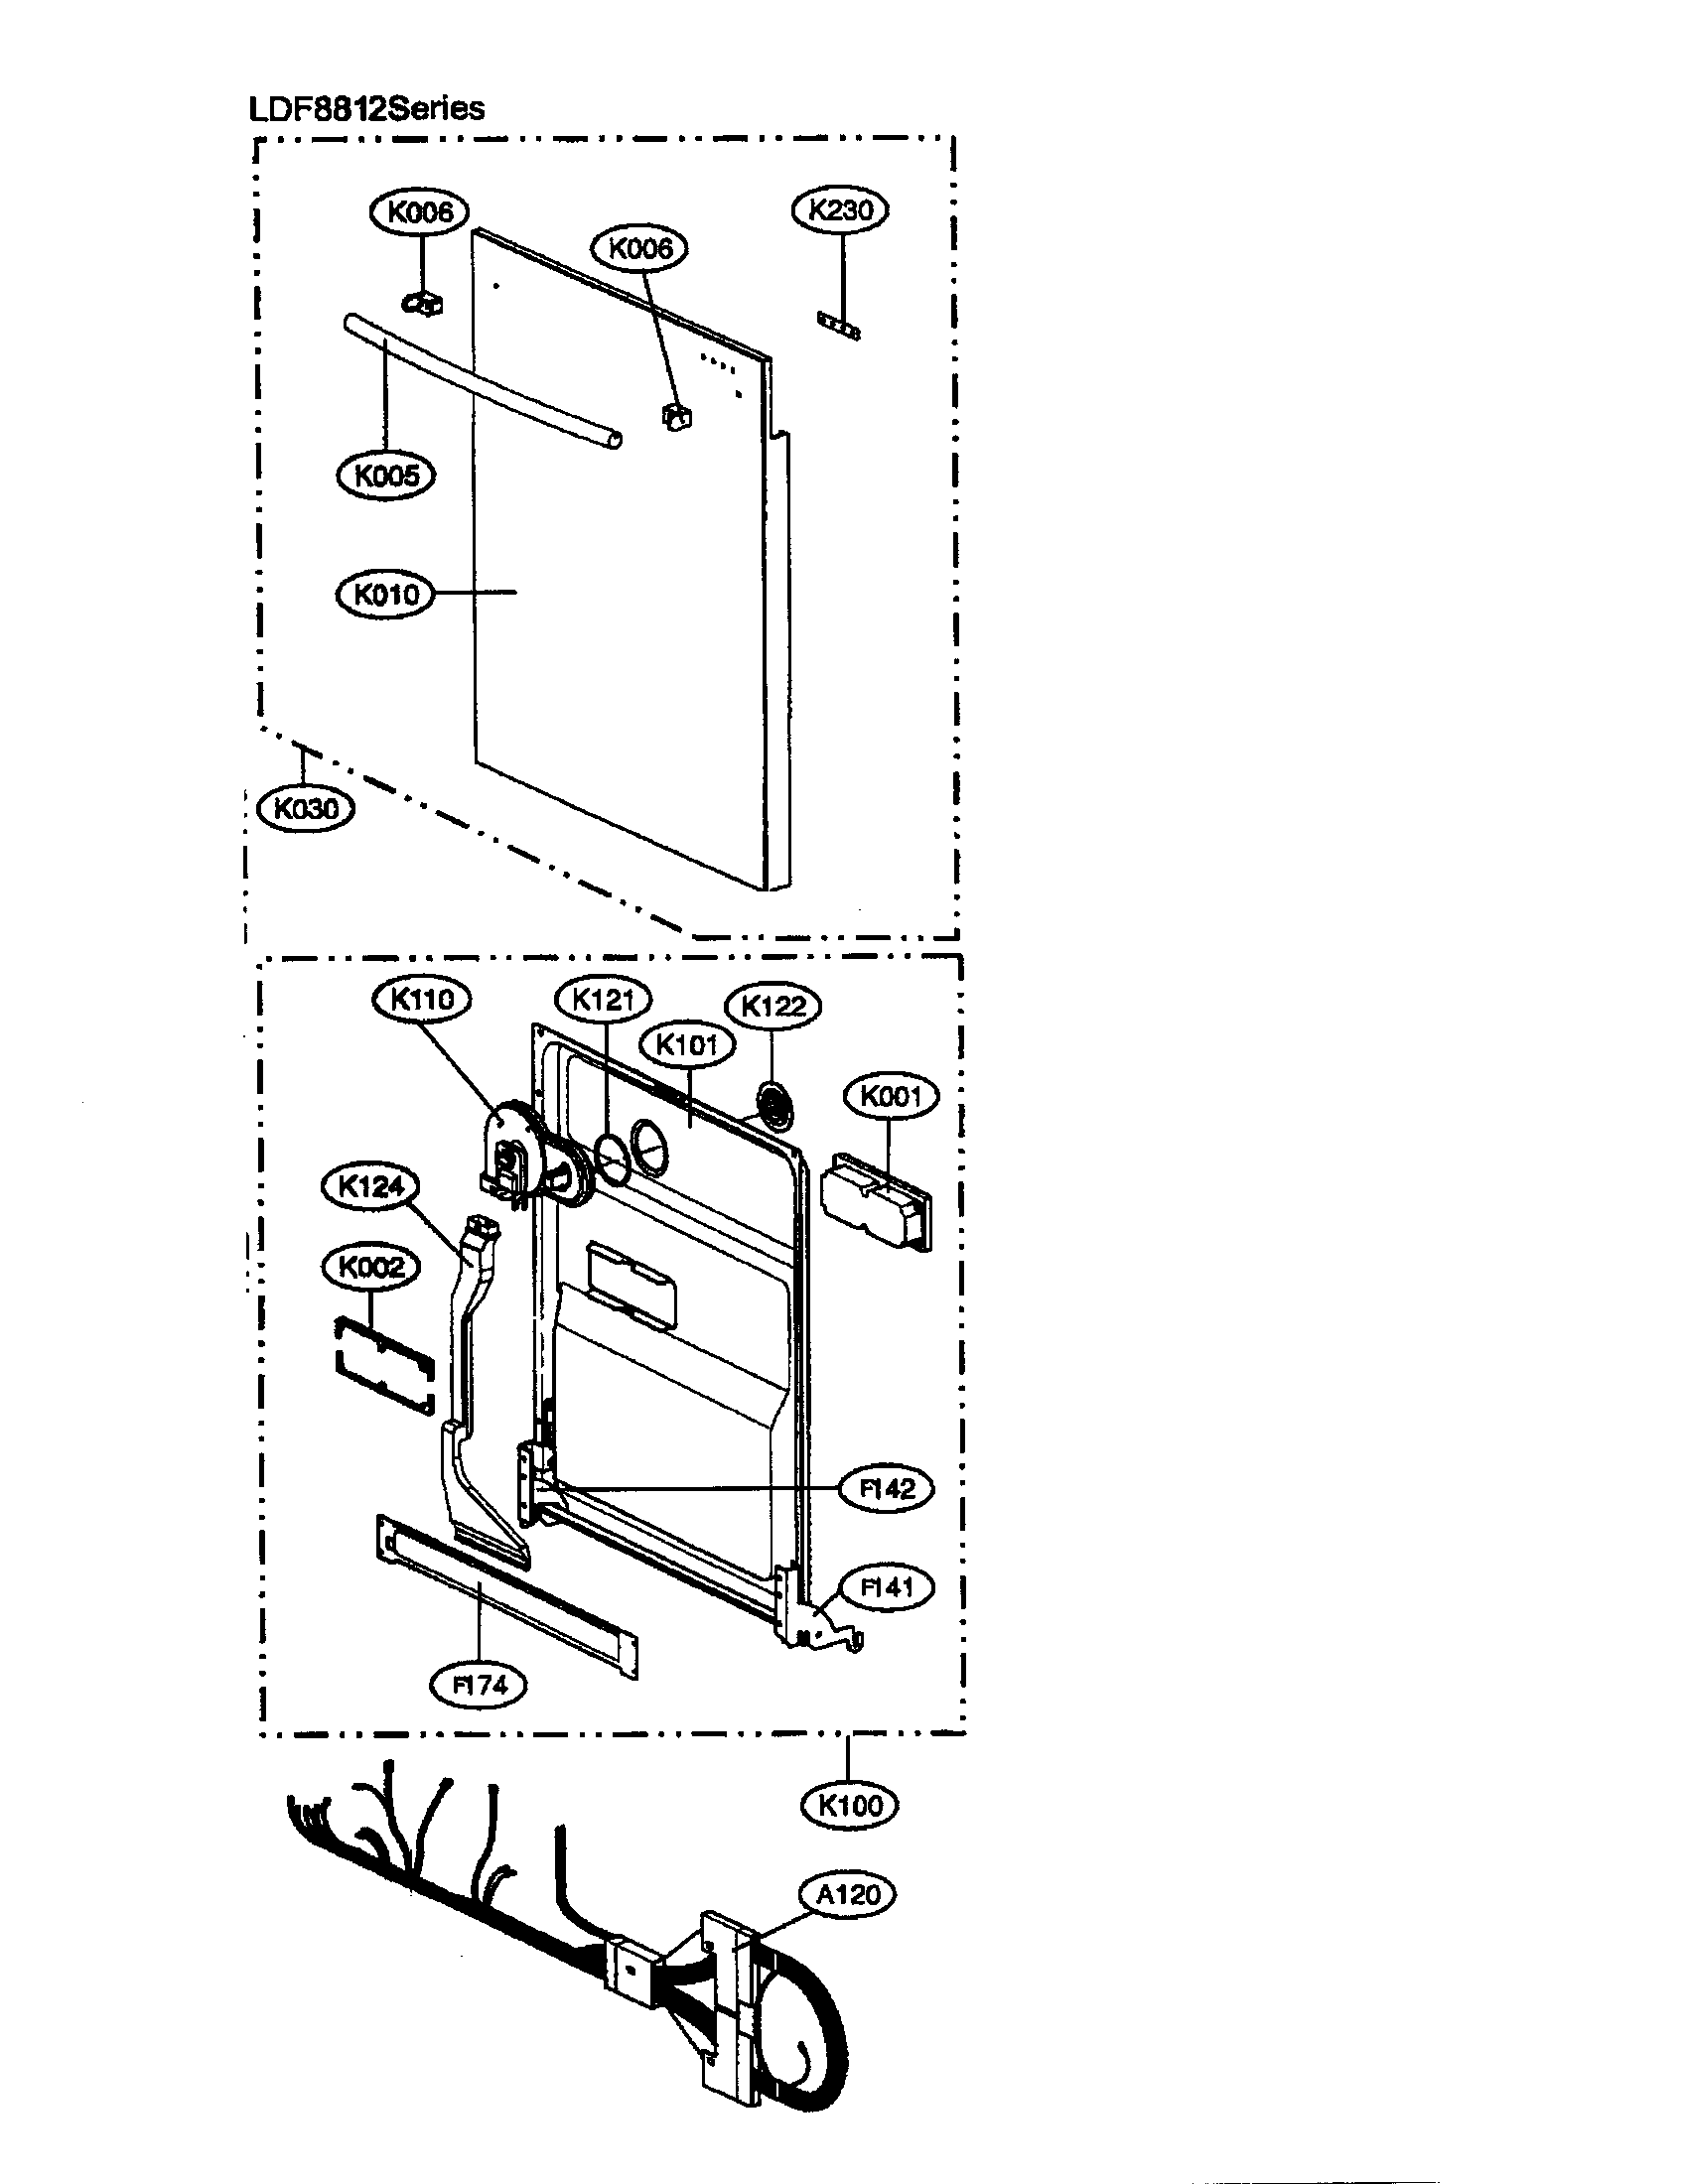 Tub Diagram  U0026 Parts List For Model Ldf8812st Lg